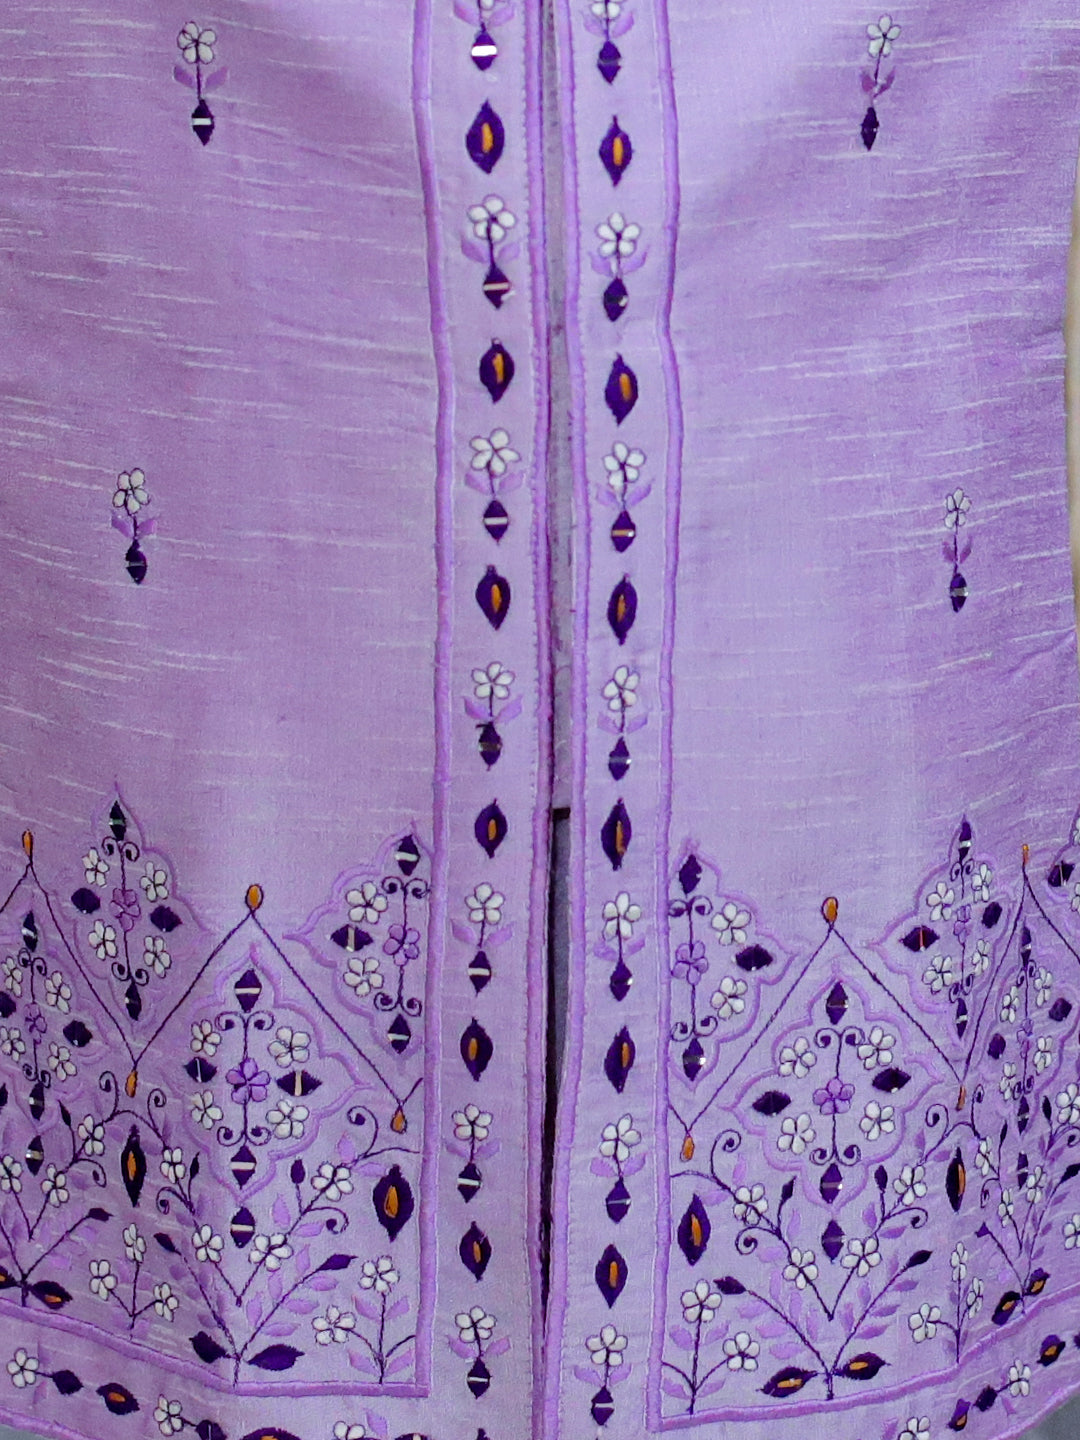 BownBee Embroidered Full Sleeve Sherwani with Pajama for Boys - Purple